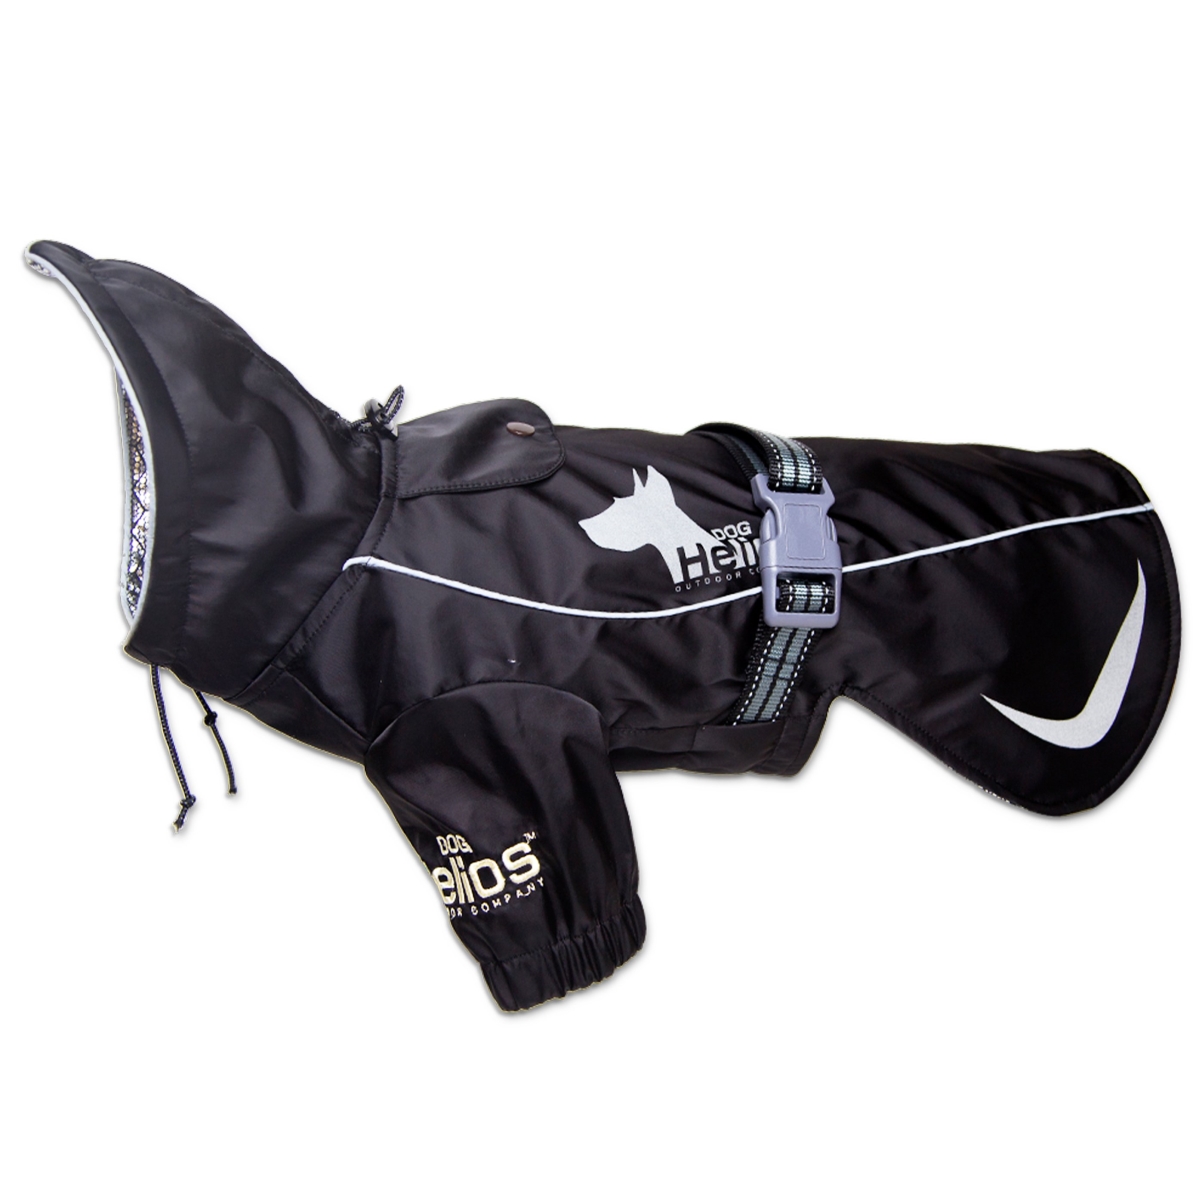 Dog Helios JKHL16BKLG Ice-Breaker Extendable Hooded Dog Coat with Heat Reflective Tech - Black - Large